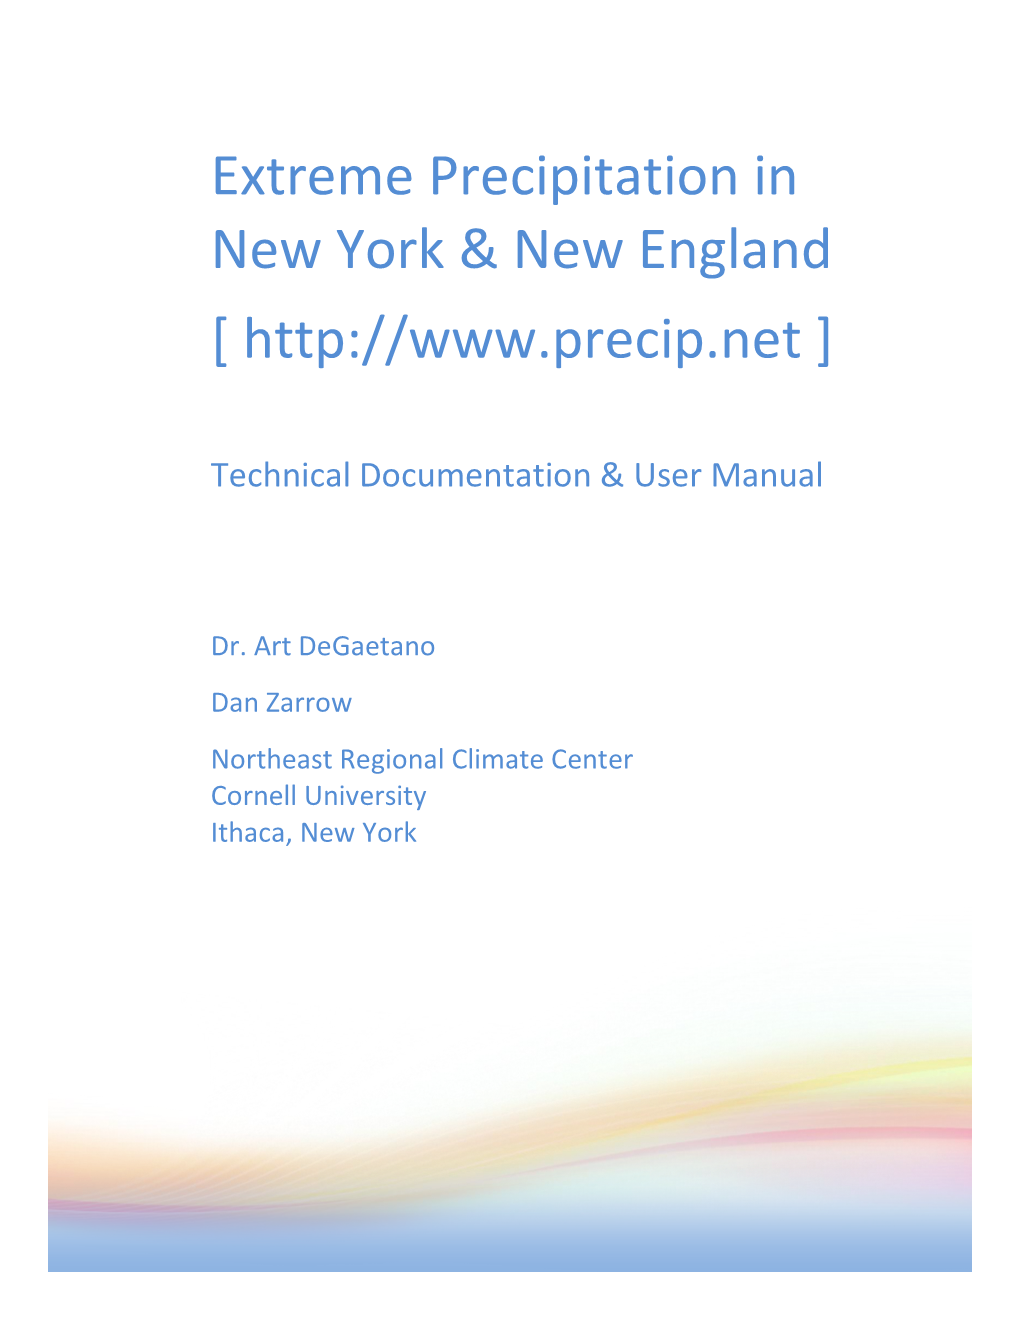 Computation of Extreme Precipitation Statistics